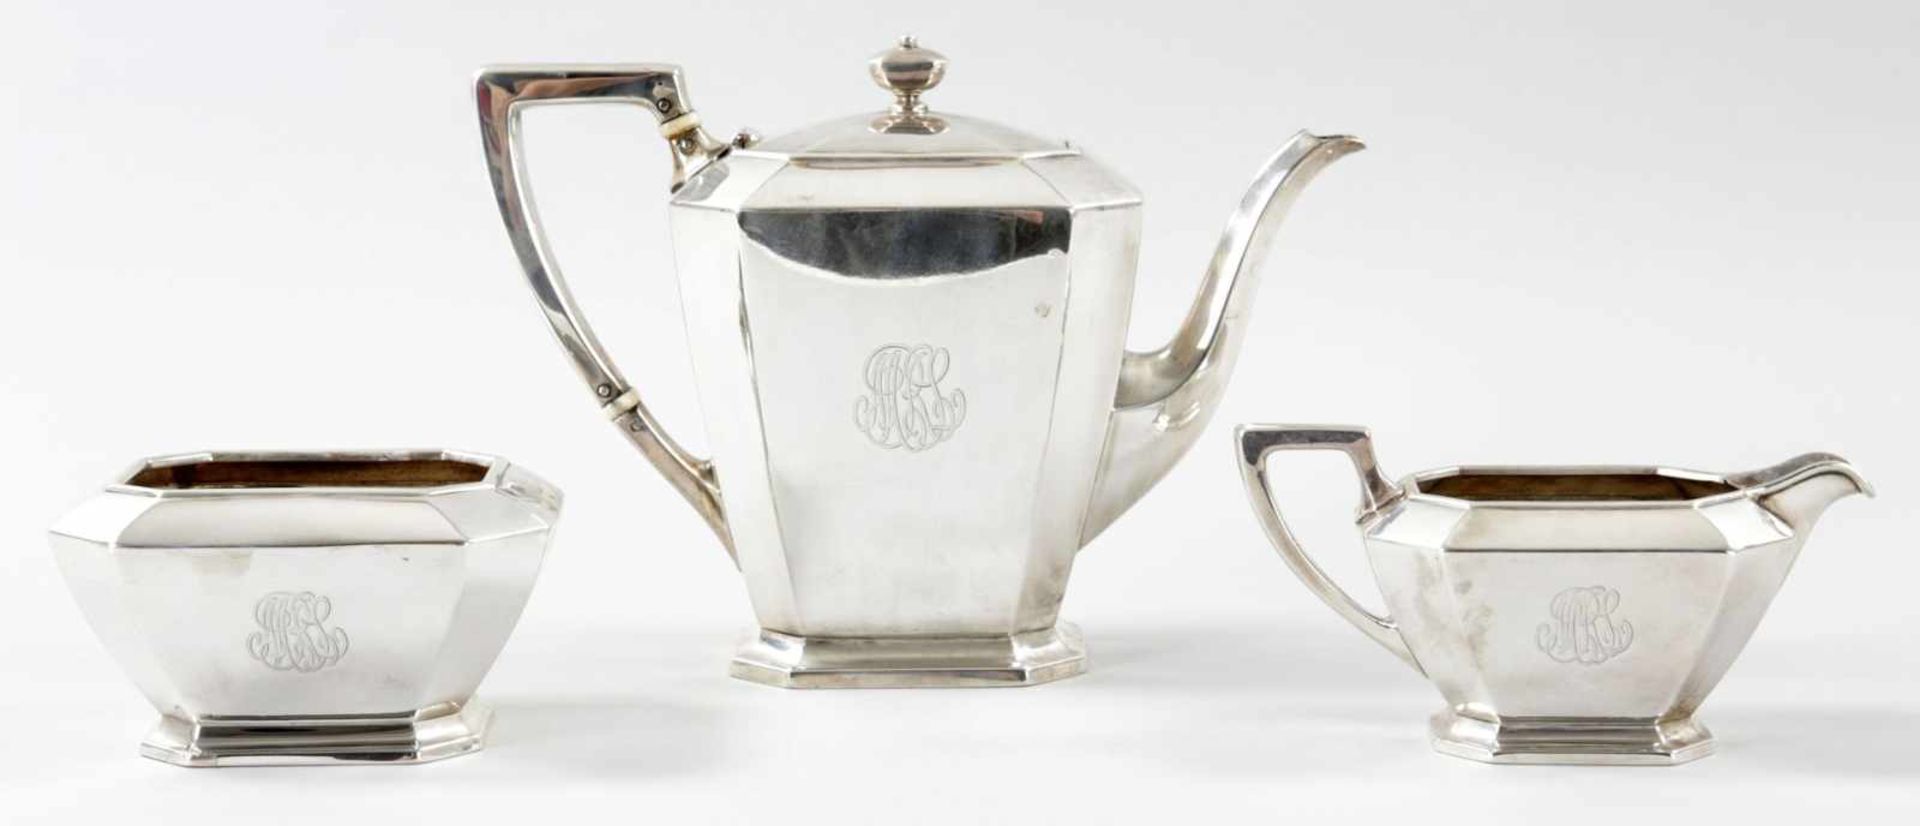 Kaffee-SetSterling Silber, Black, Starr & Frost (New York), um 1920 Auf rechteckigem, abgesetztem